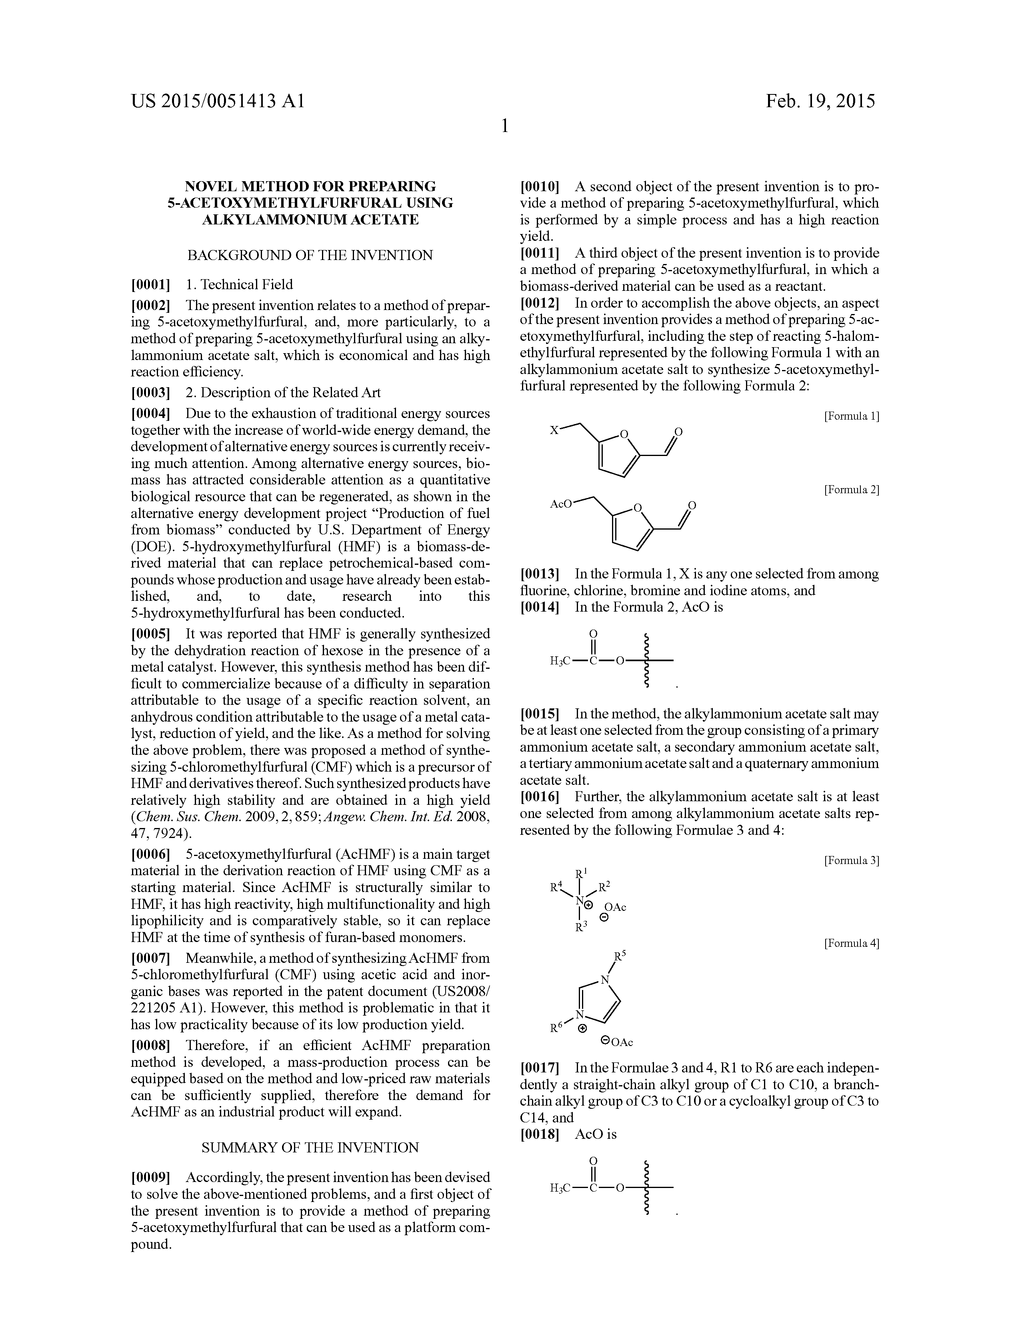 NOVEL METHOD FOR PREPARING 5-ACETOXYMETHYLFURFURAL USING ALKYLAMMONIUM     ACETATE - diagram, schematic, and image 02